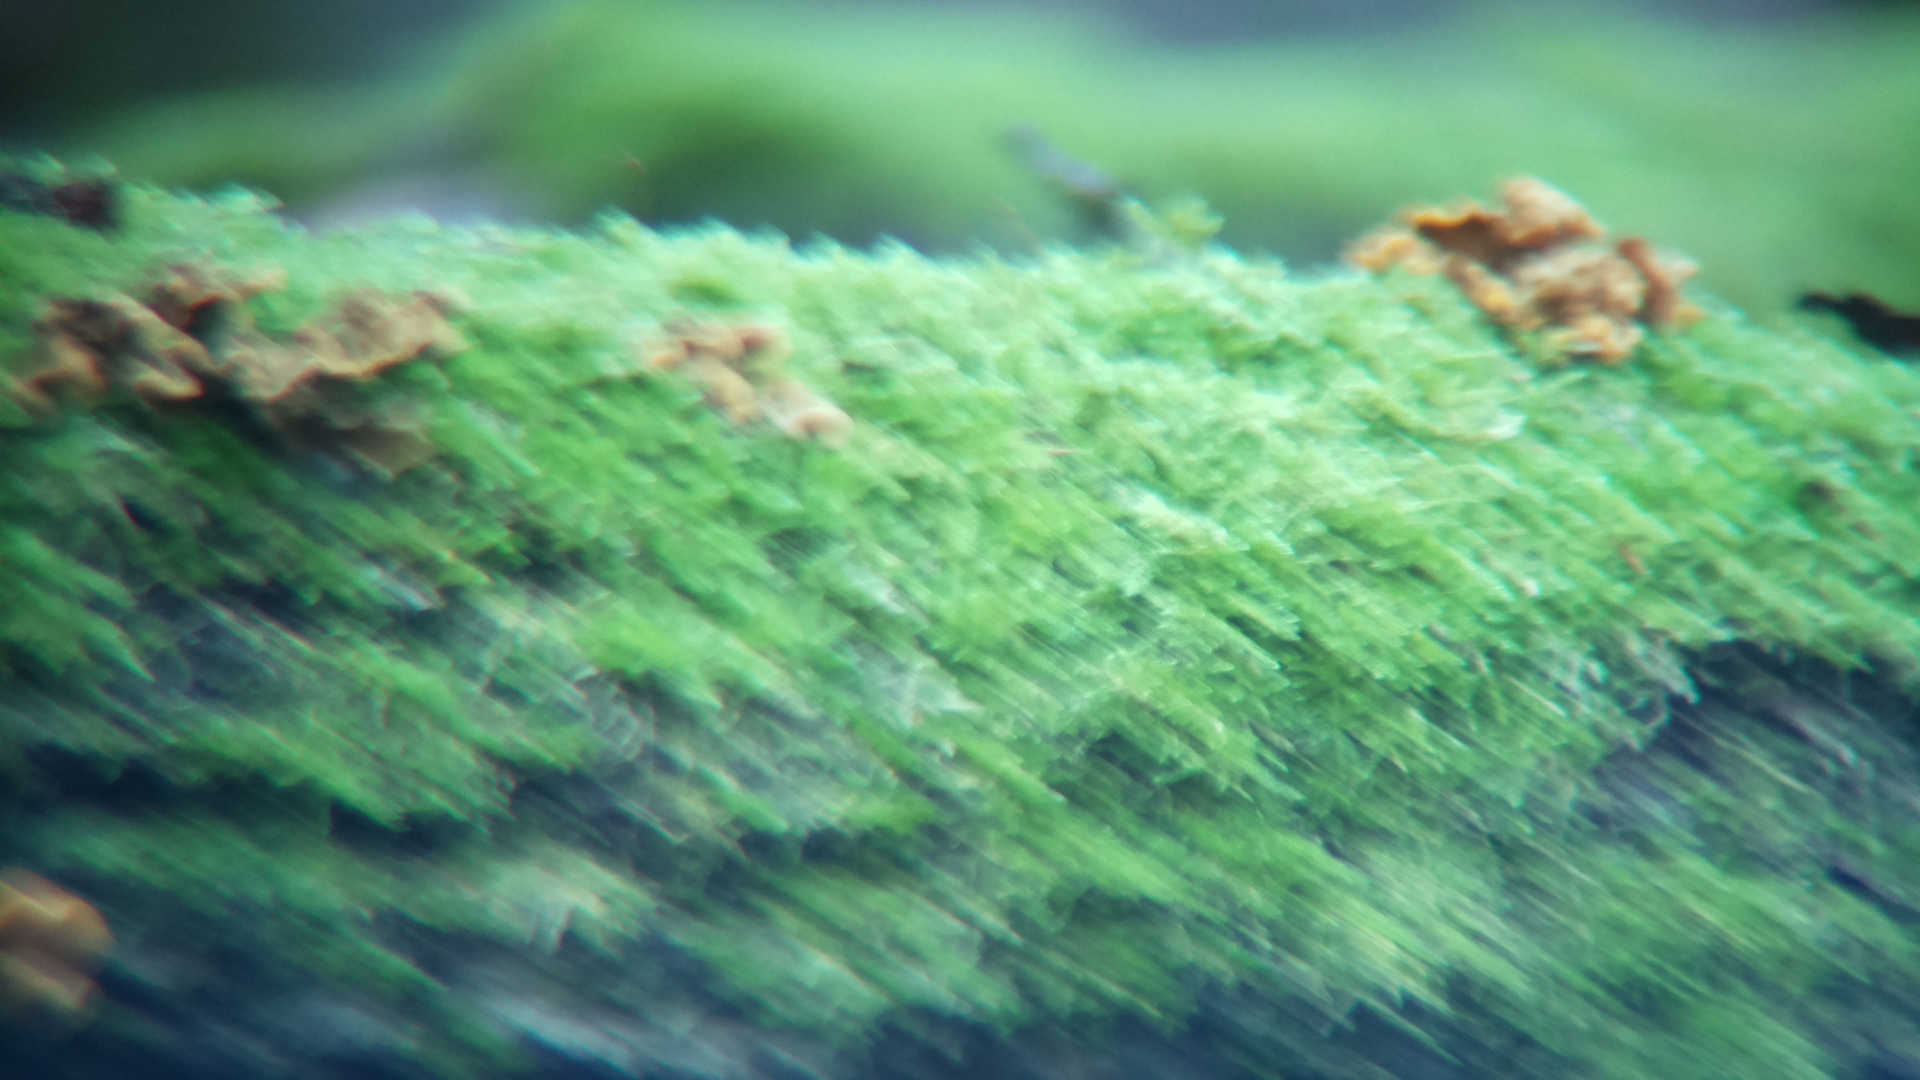 blurry moss on tree stump